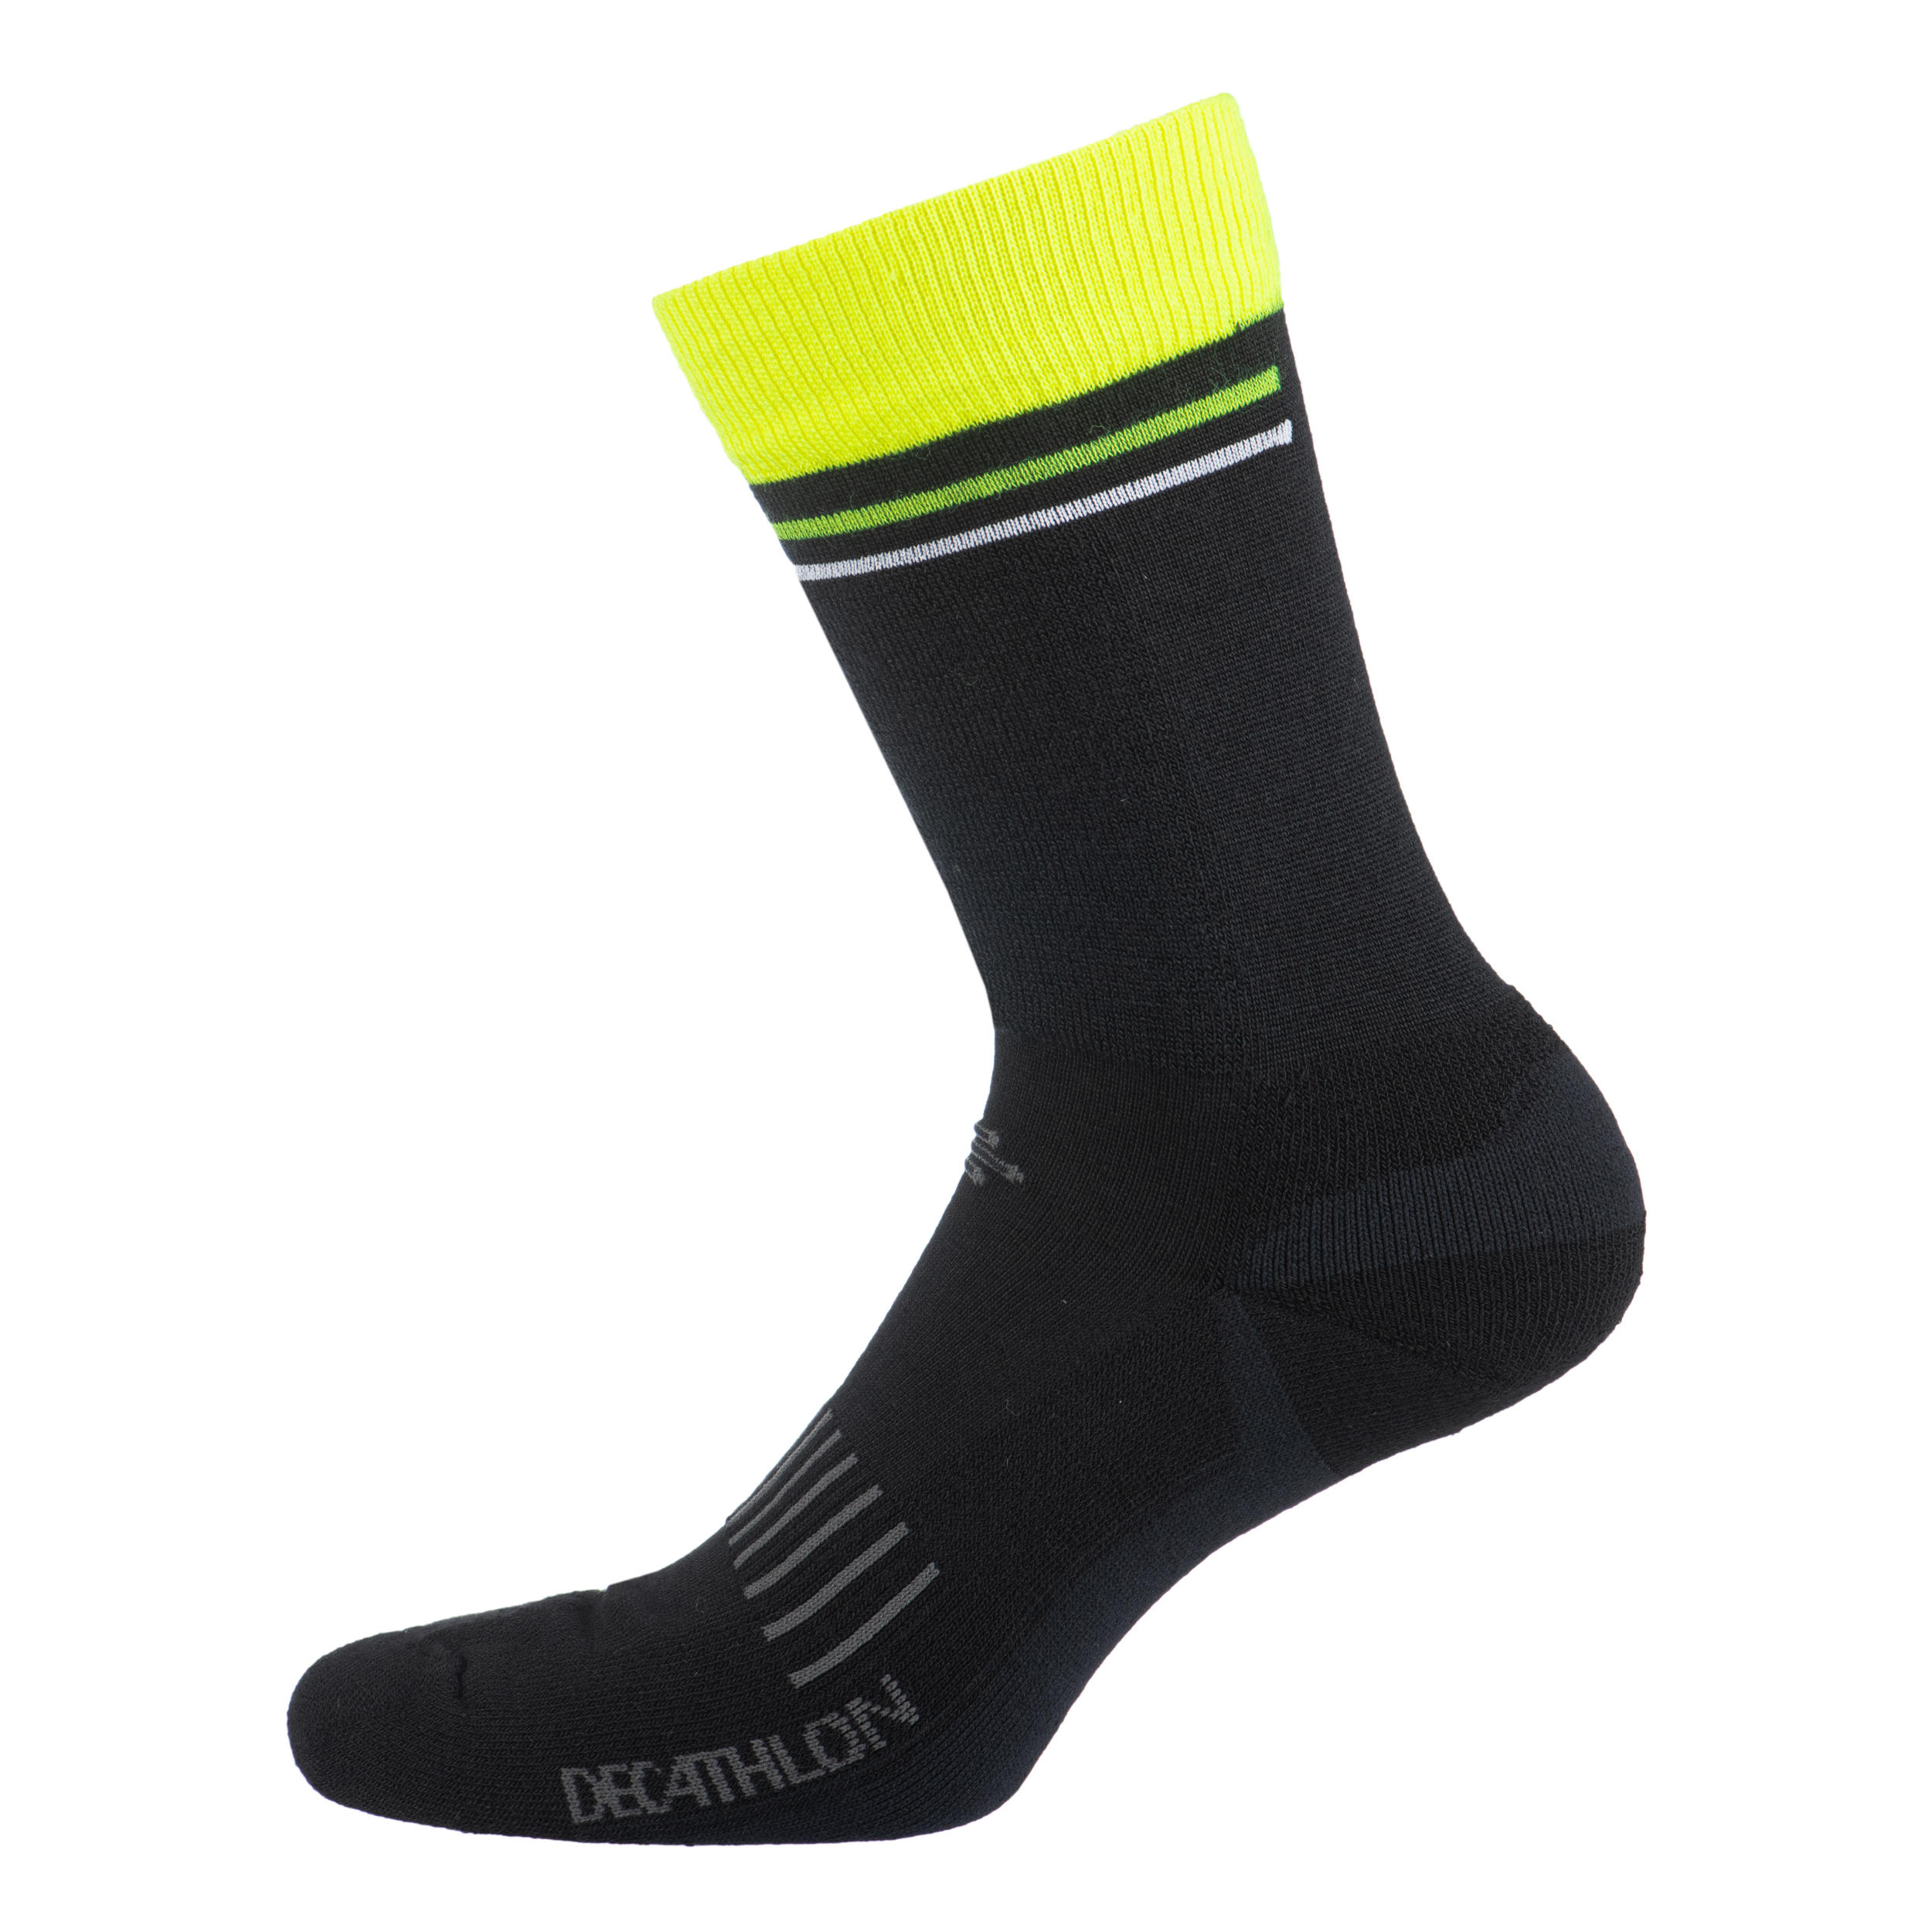 900 Winter Cycling Socks - Black/Yellow 2/3